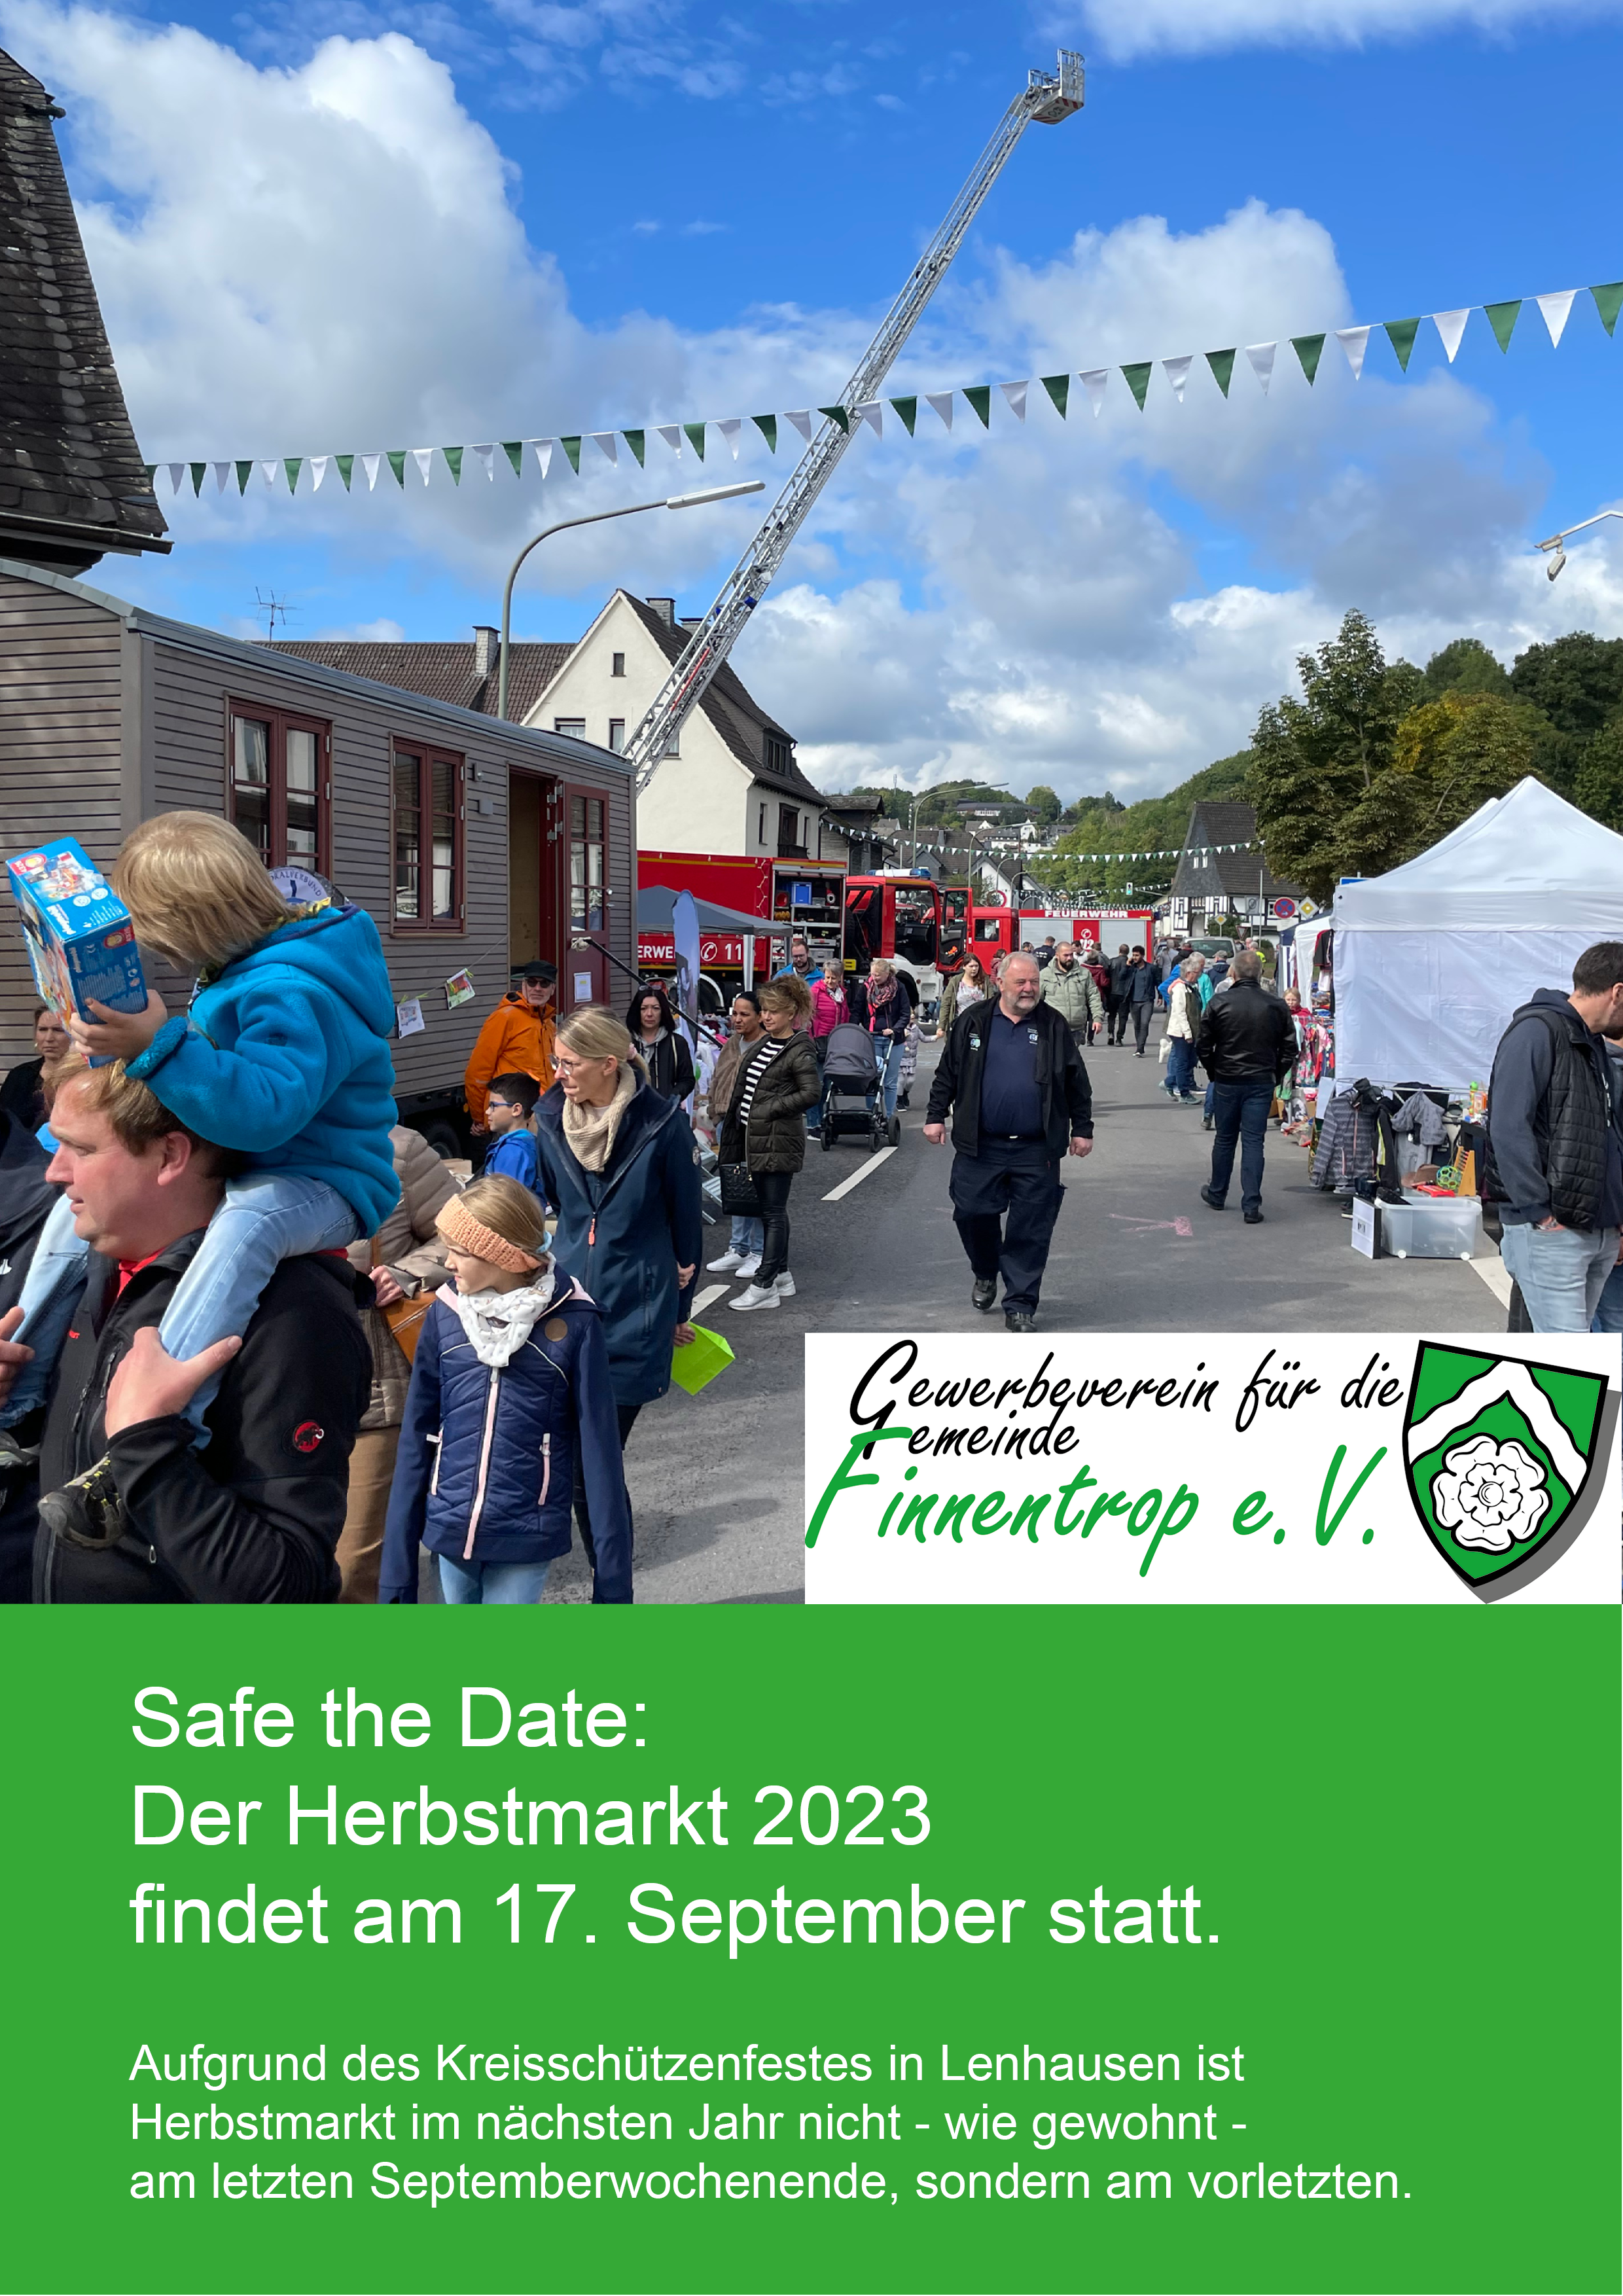 Safe the date Herbstmarkt 2023